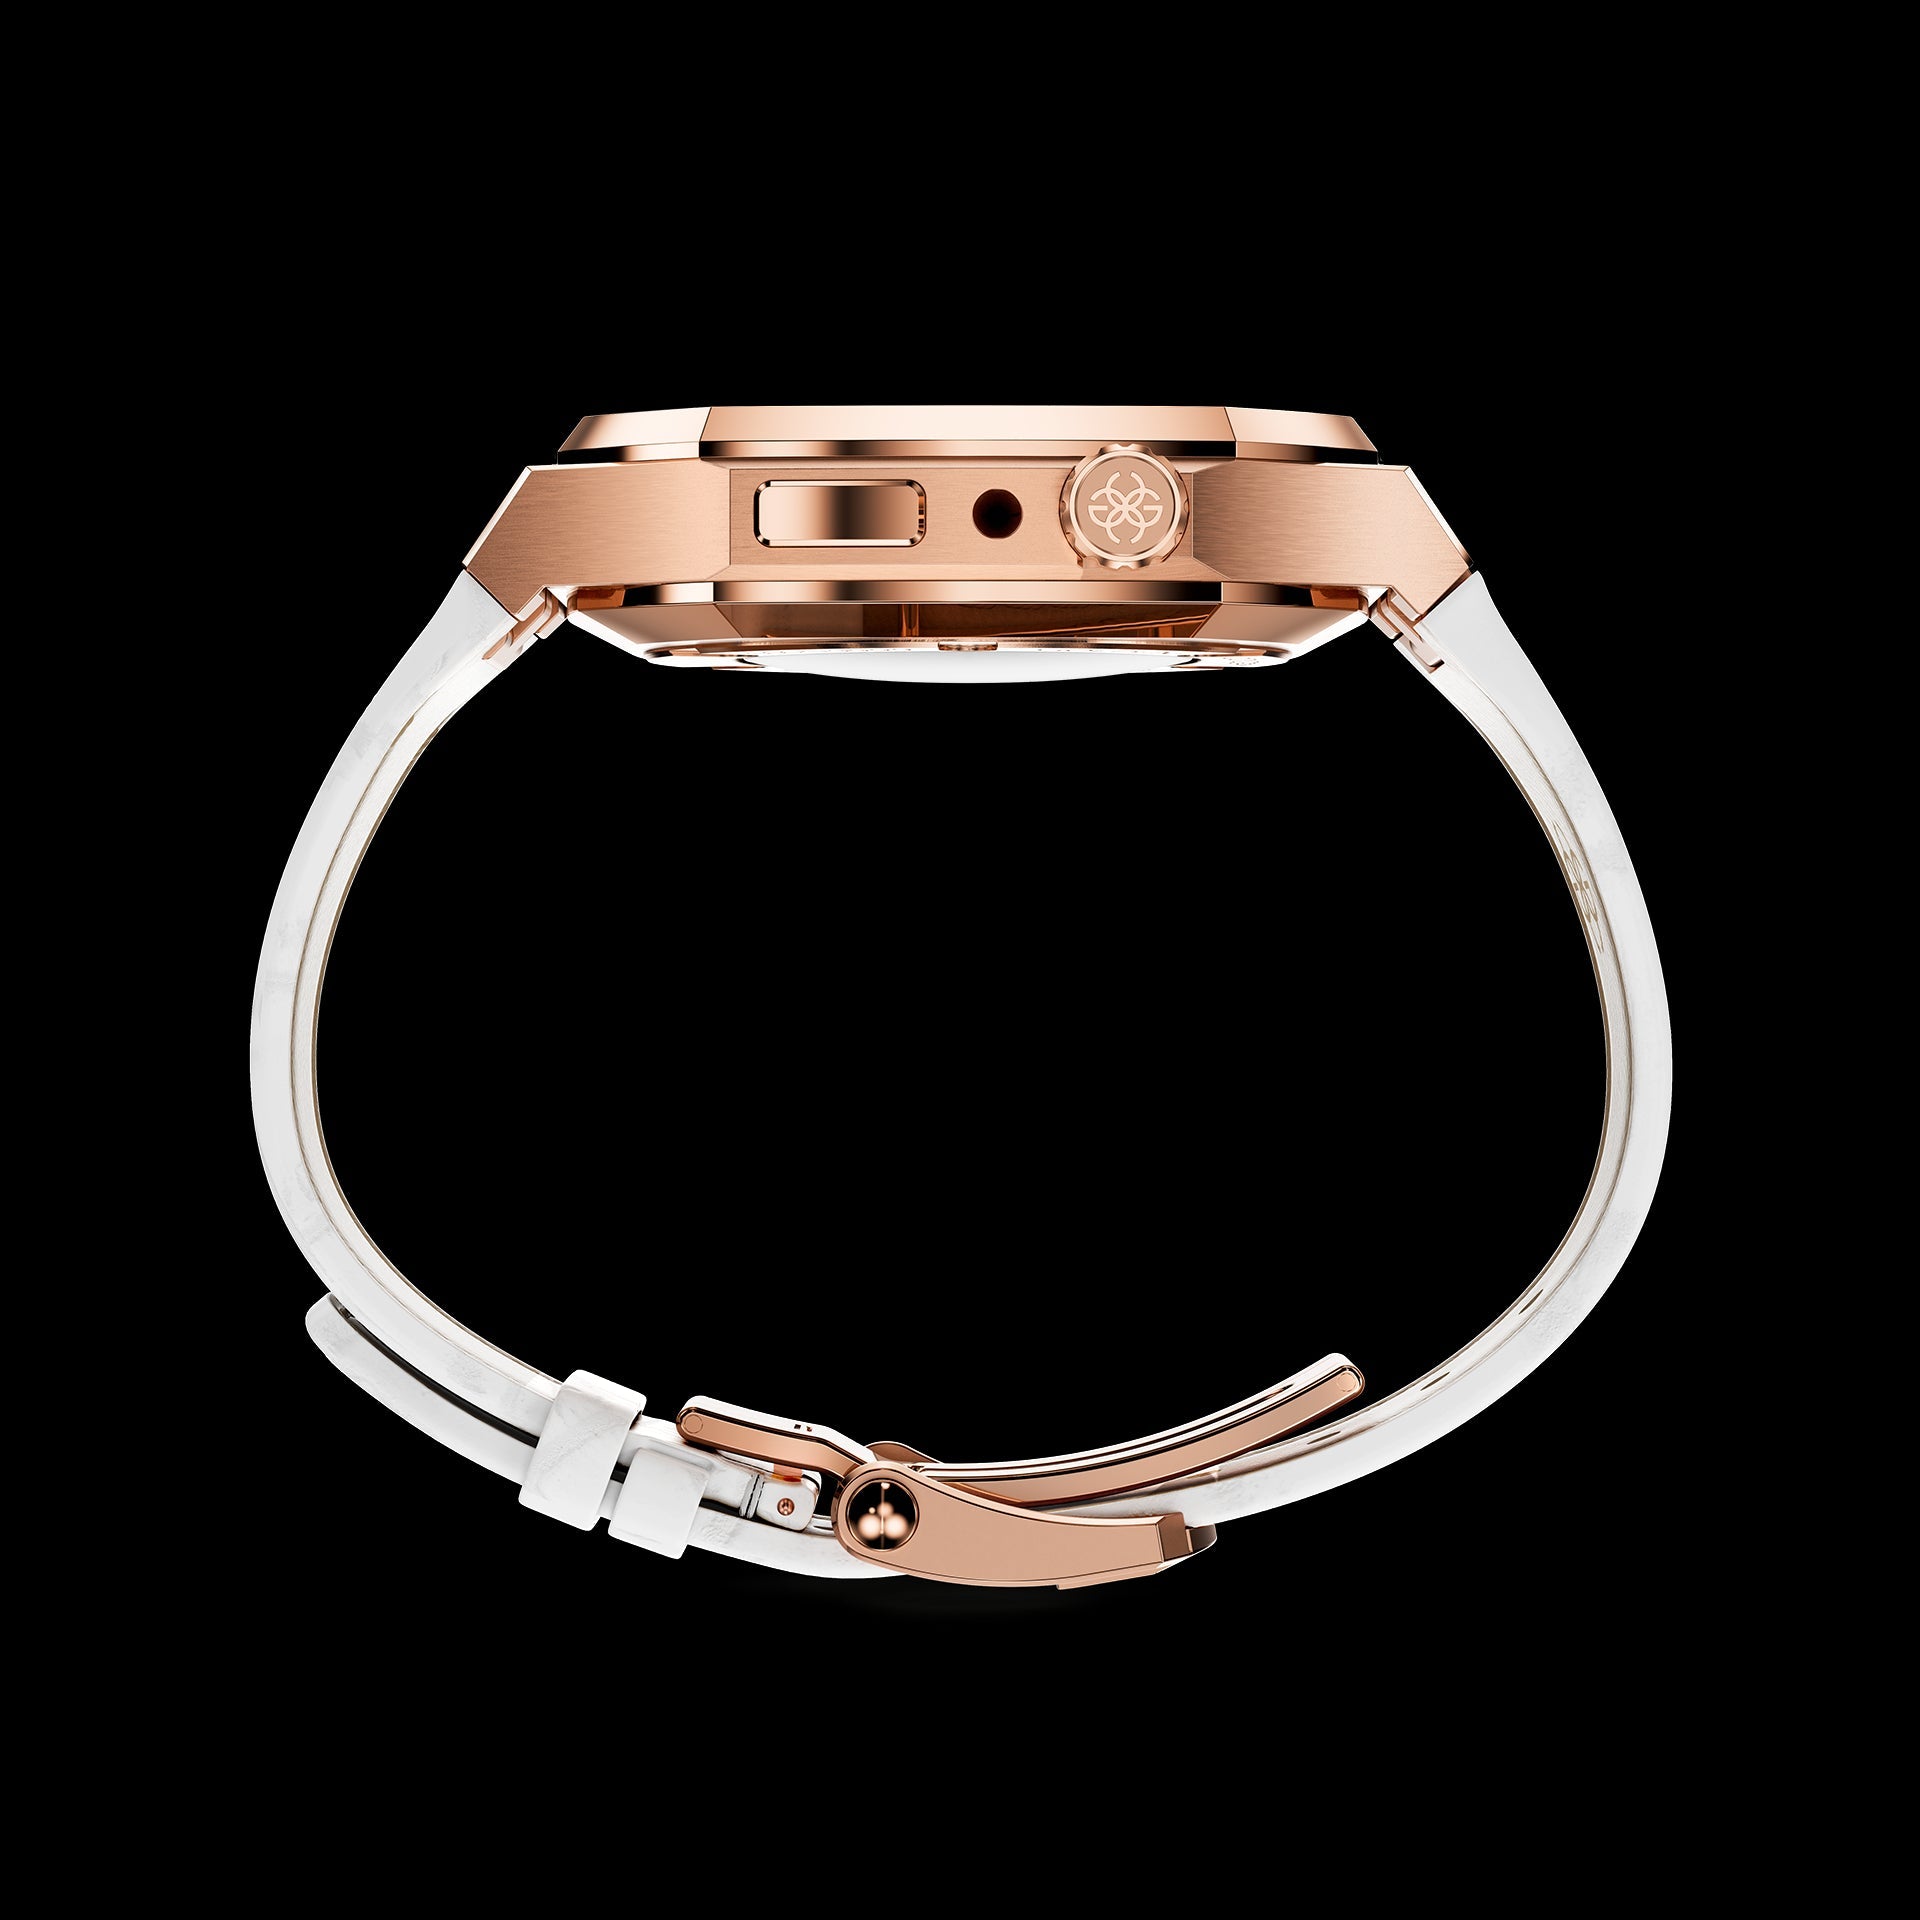 Golden Concept Apple Watch Case Rose Gold 41mm Steel Leather 7-Mar-23